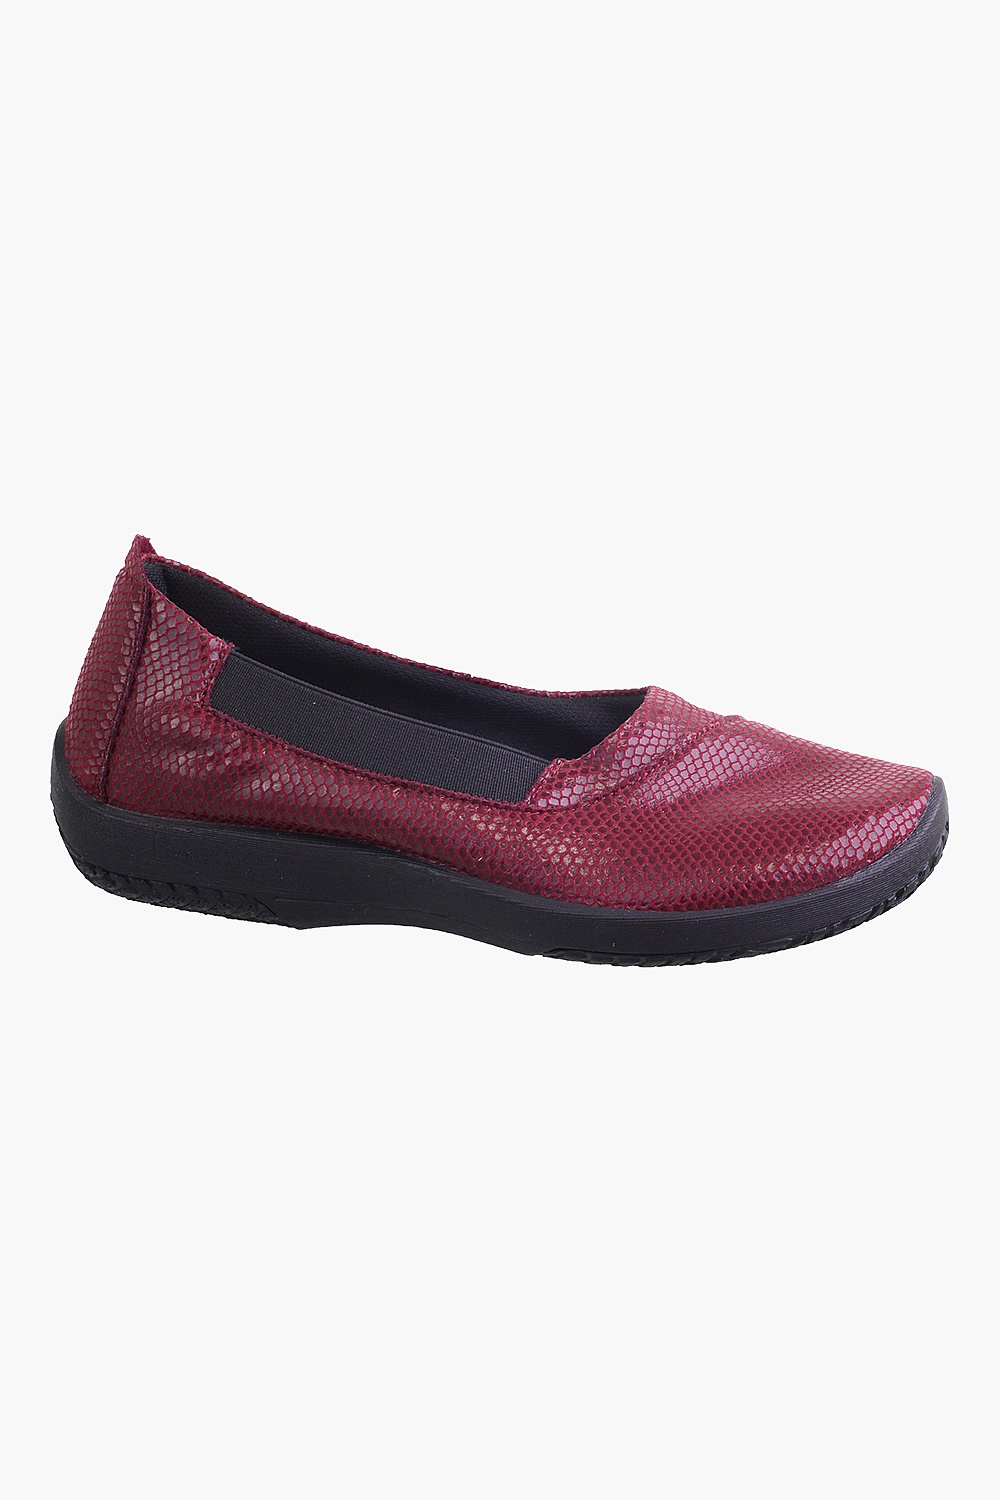 Arcopedico Shoes on Sale - Lucia